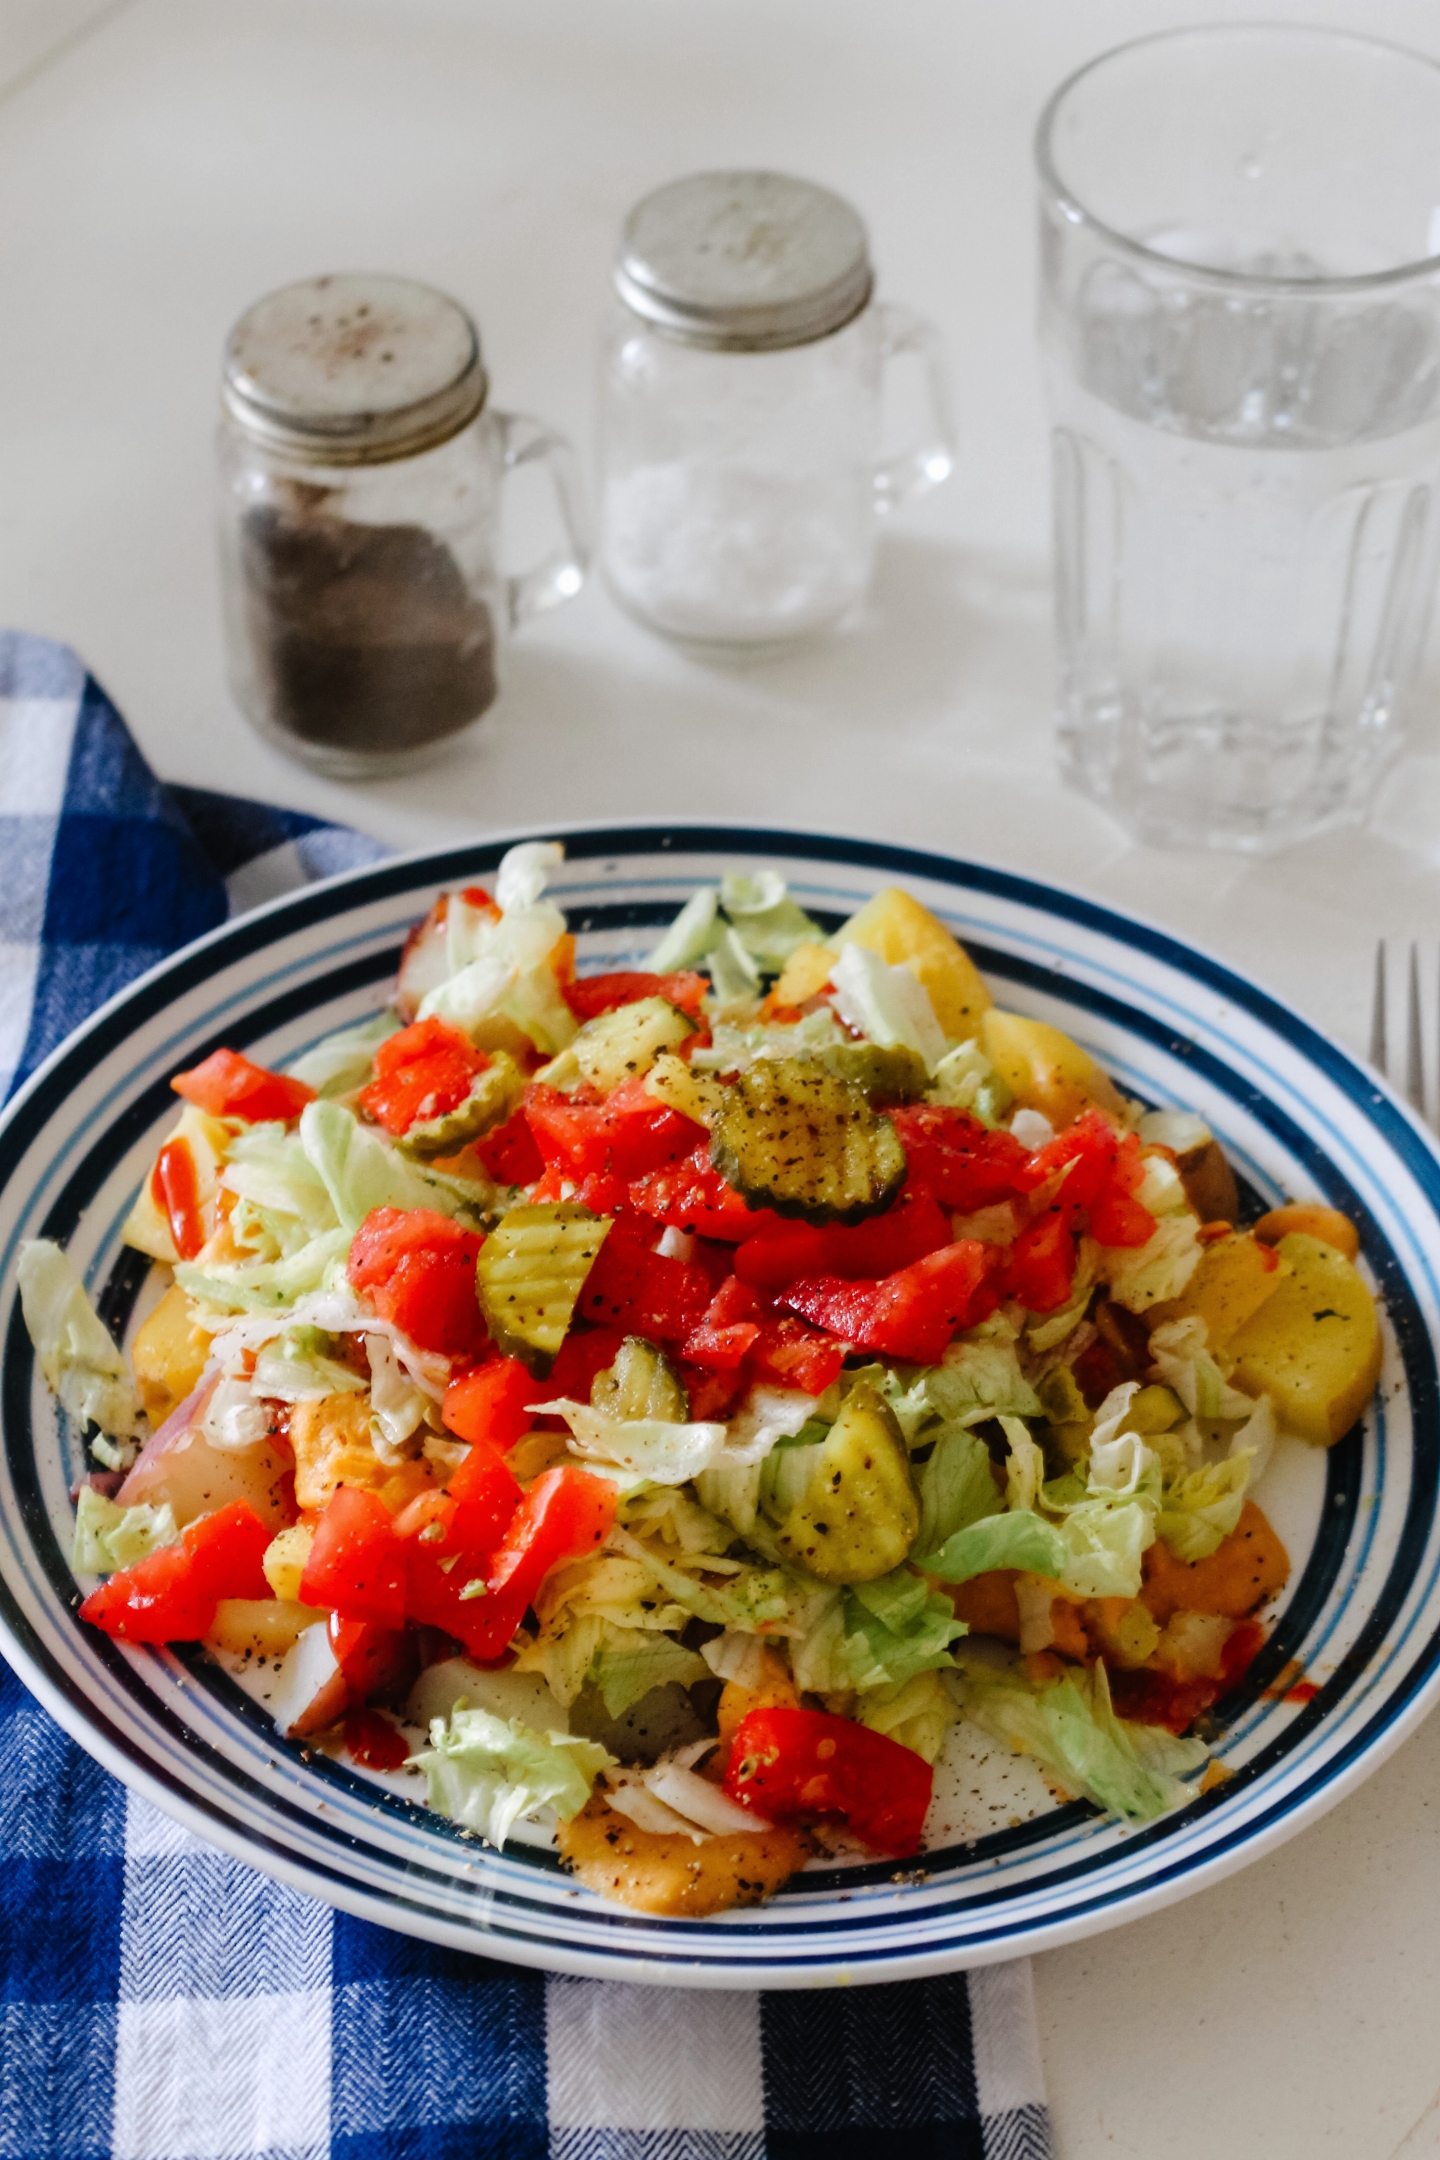 PLT – Potato, Lettuce, and Tomato (Starch Solution diet)